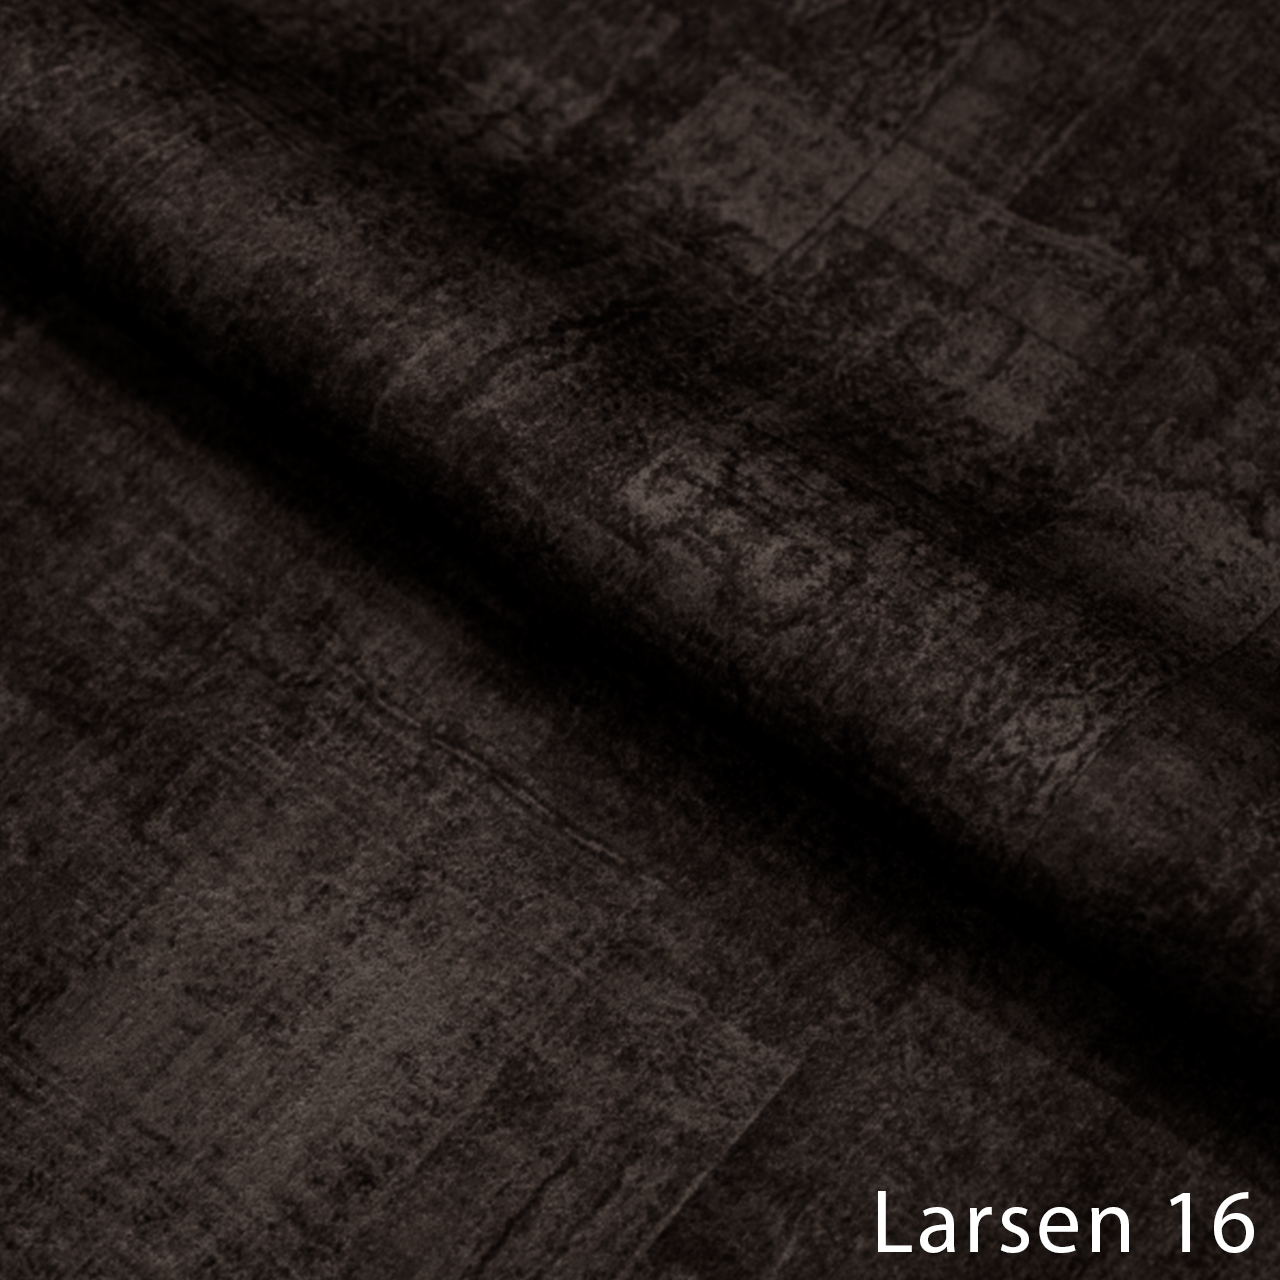 Larsen 16